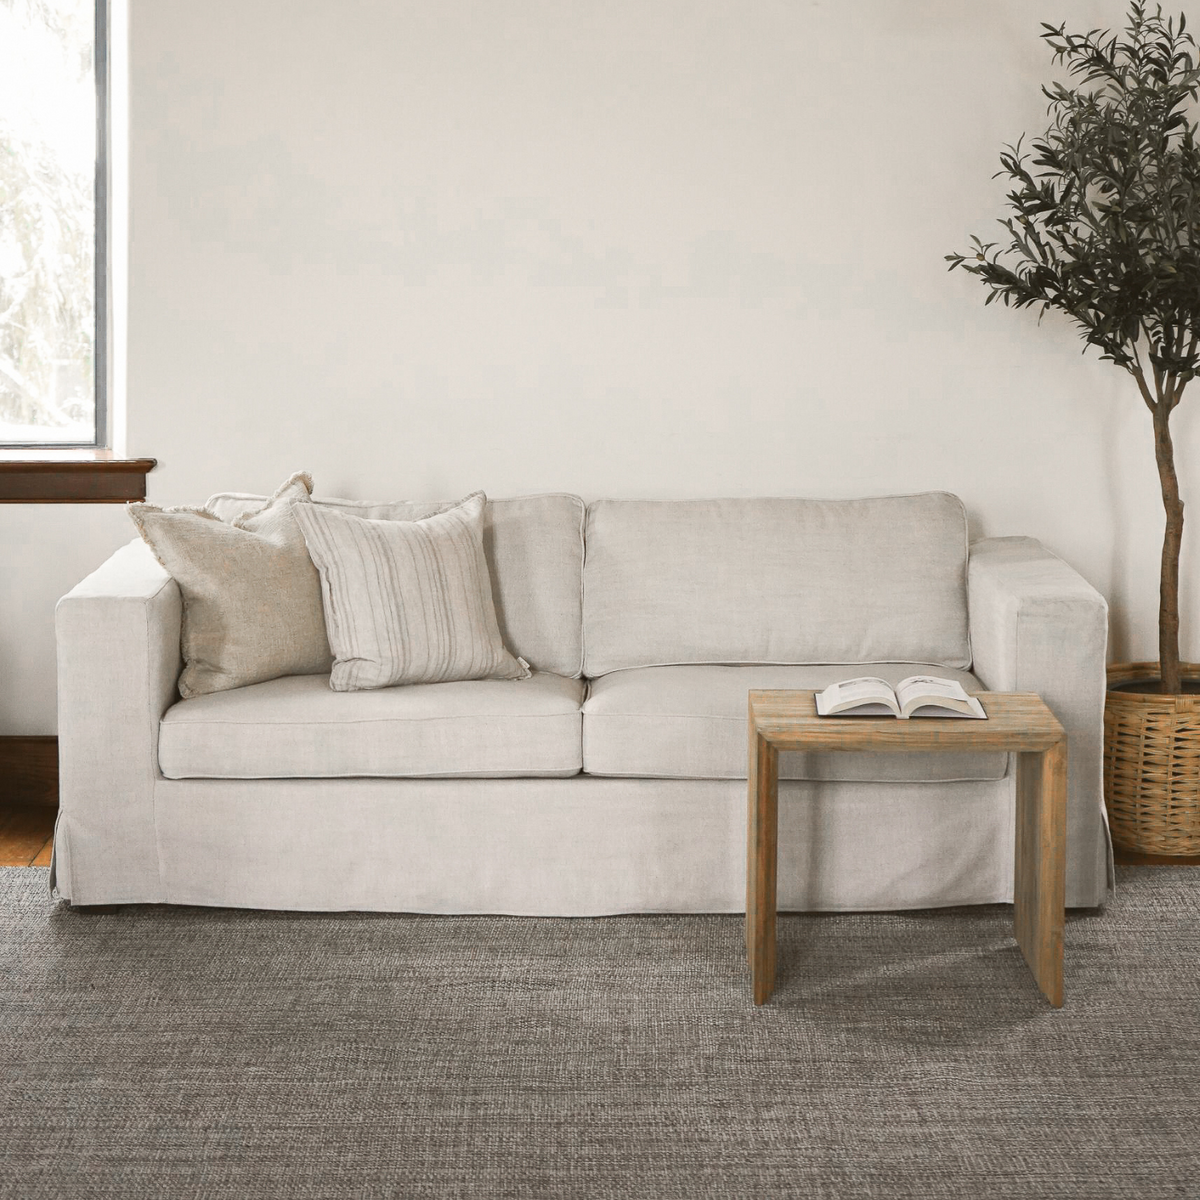 Denver Natural Linen Stores – Sofa Company Hauser Slipcover